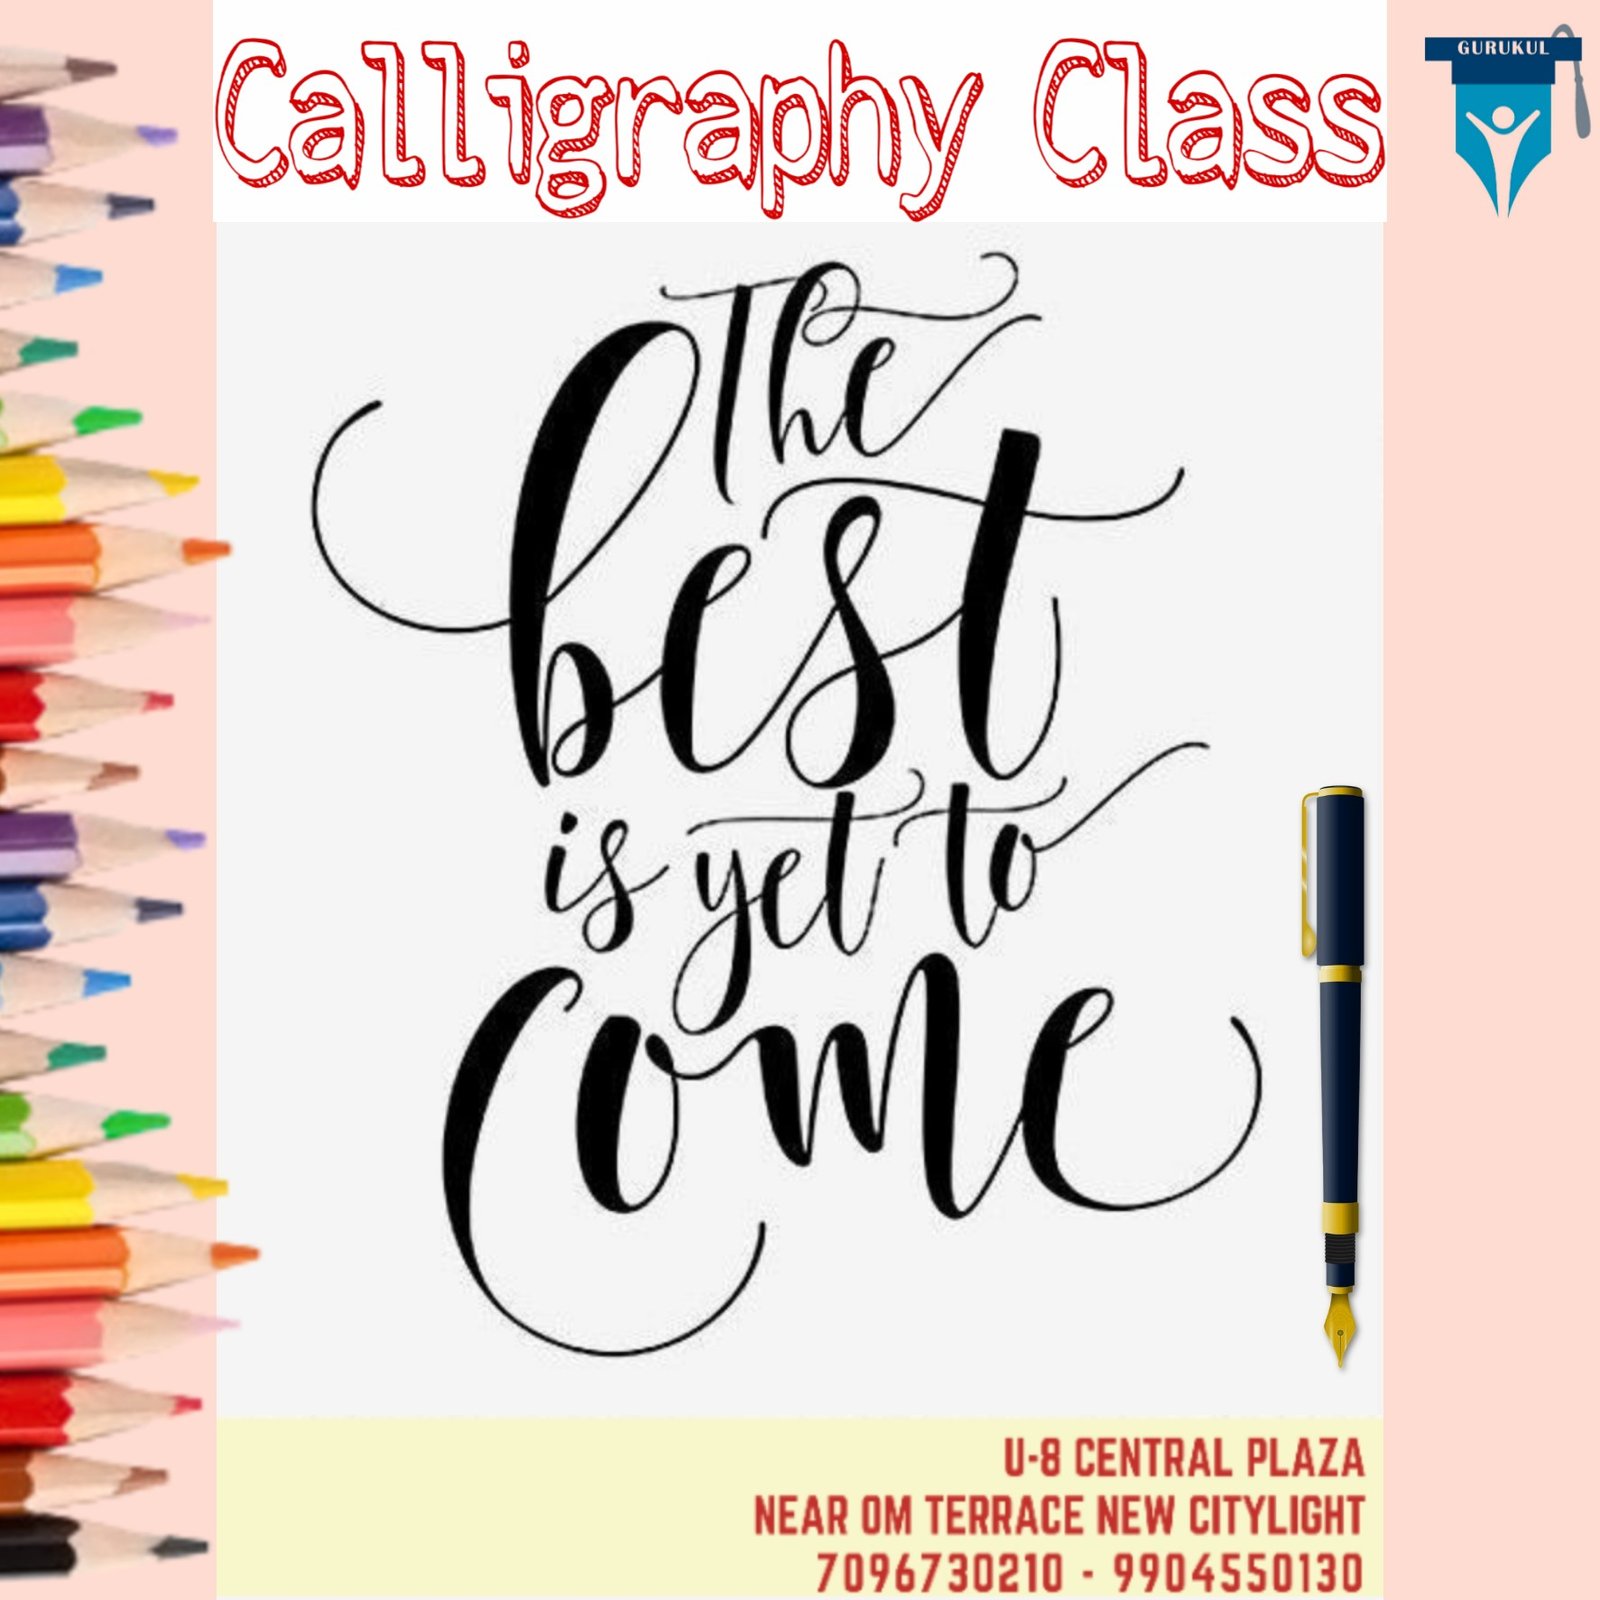 Calligraphy Class